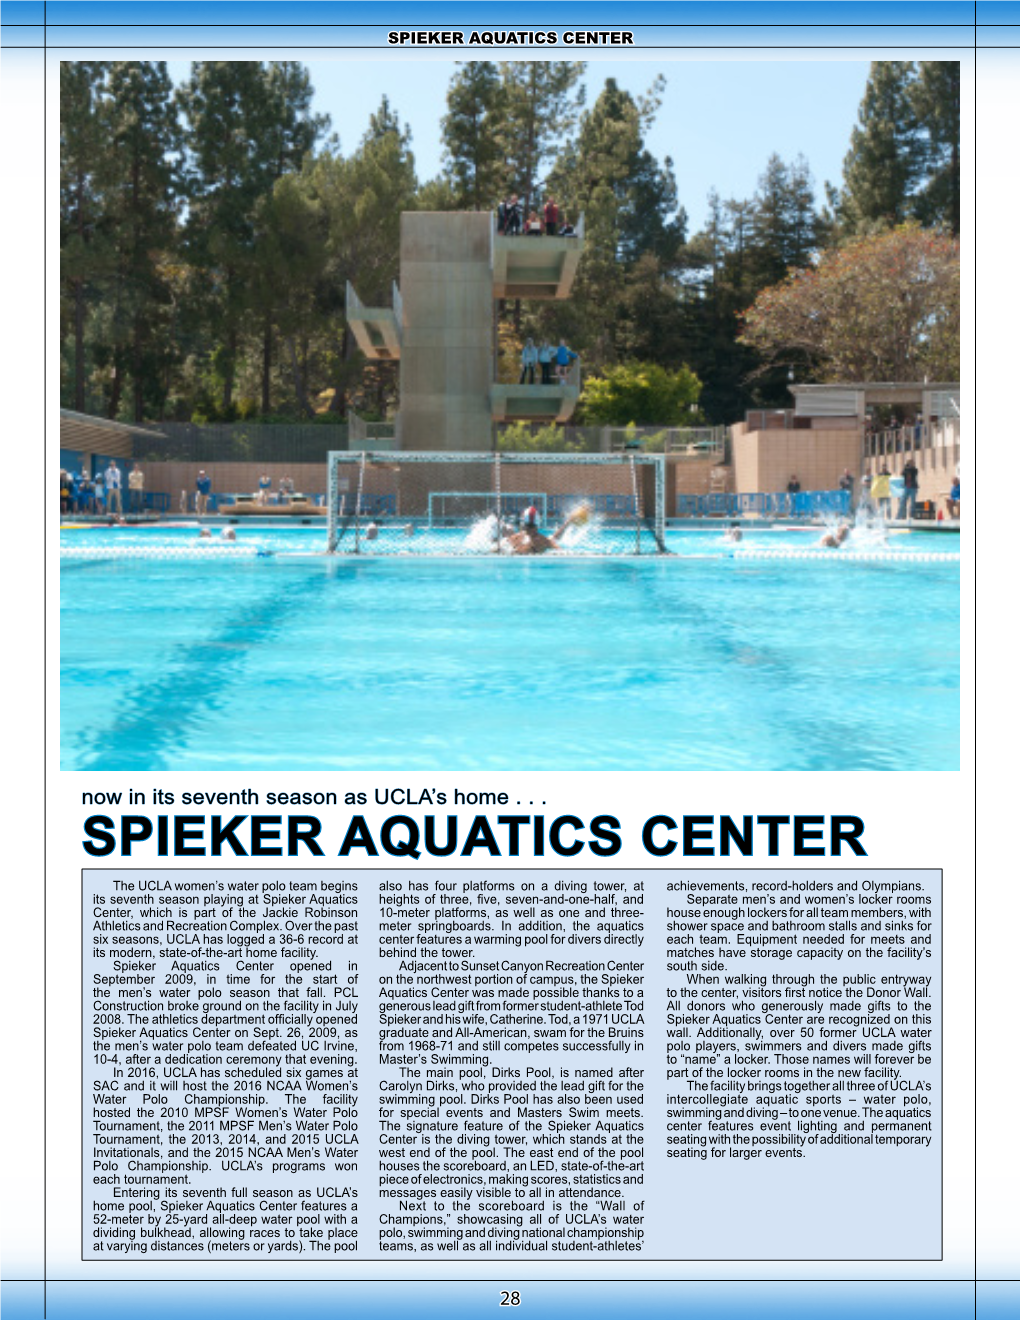 Spieker Aquatics Center